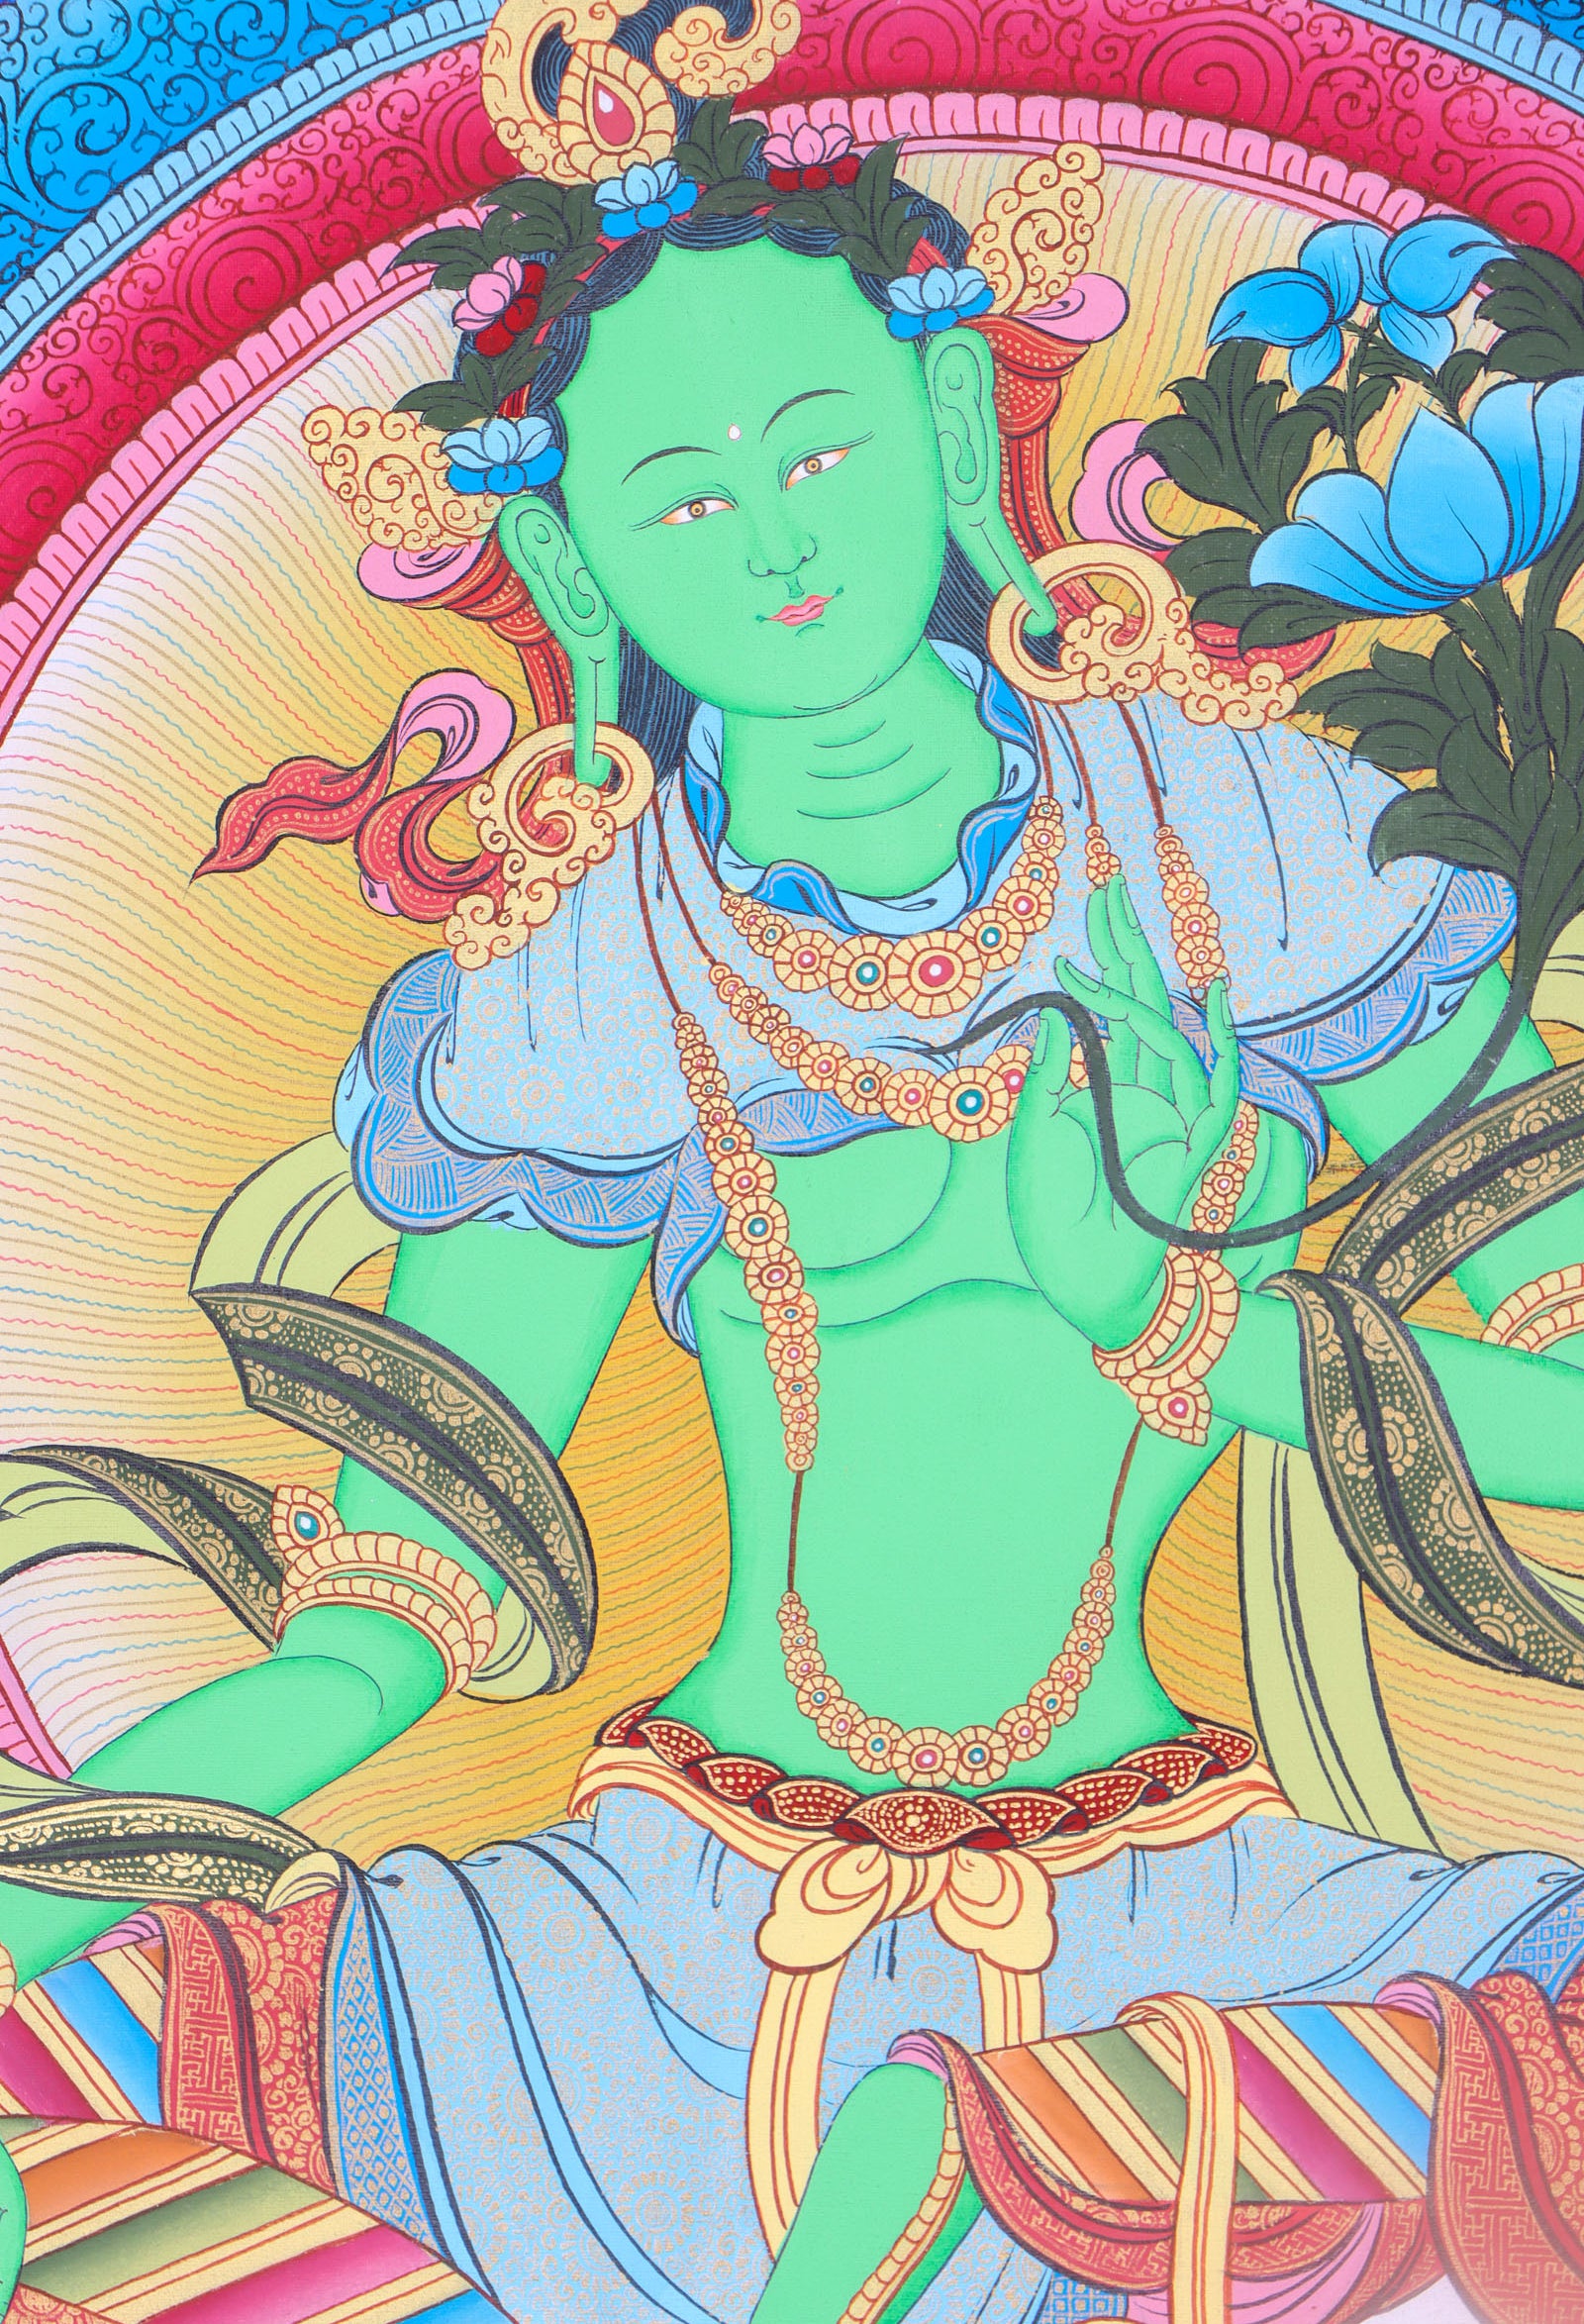 Green Tara Thangka Painting for spirituality.